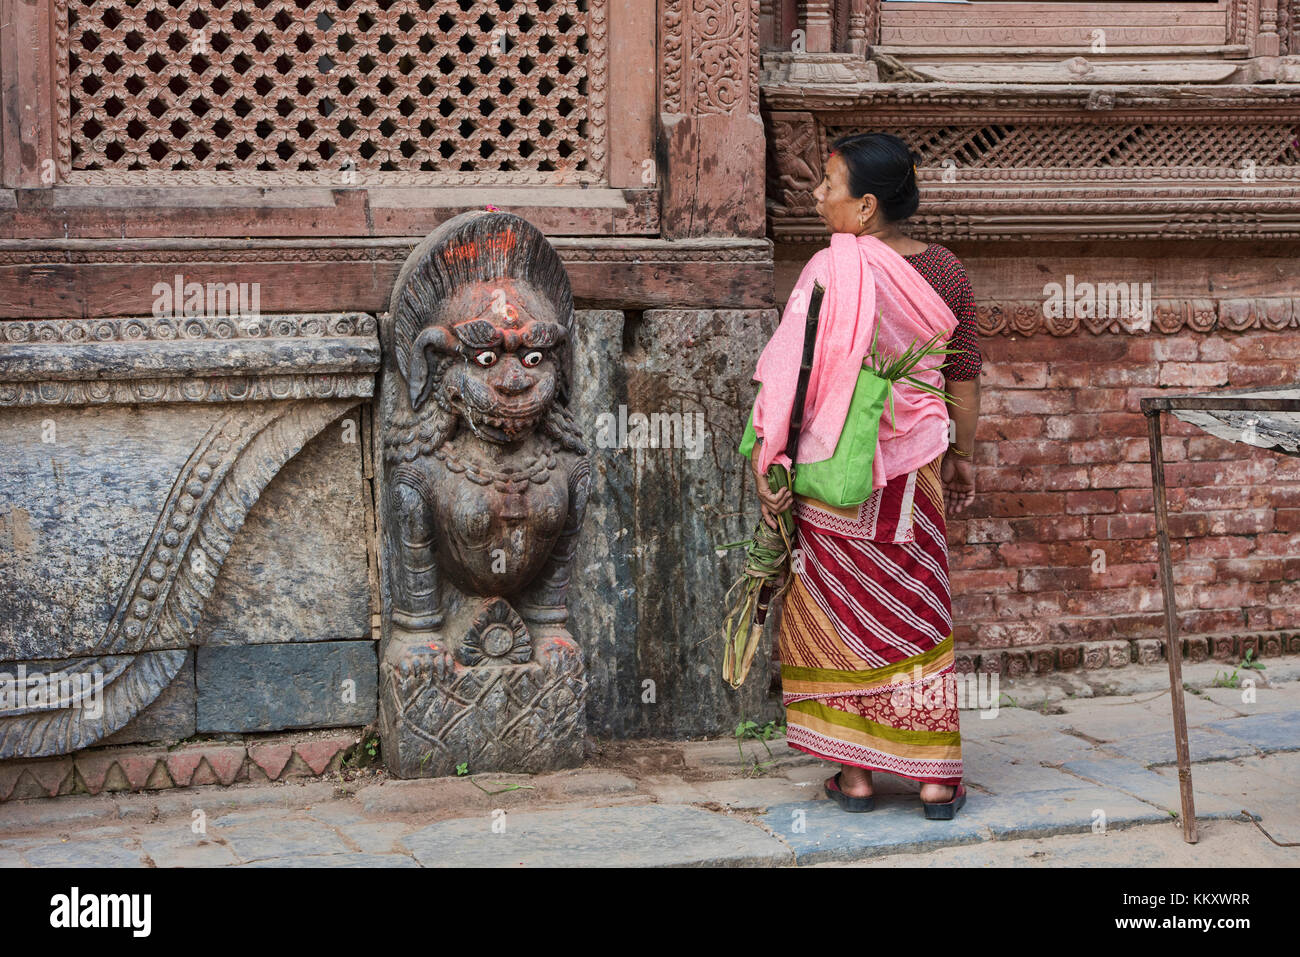 Woman and demon, Durbar Square, Kathmandu, Nepal Stock Photo